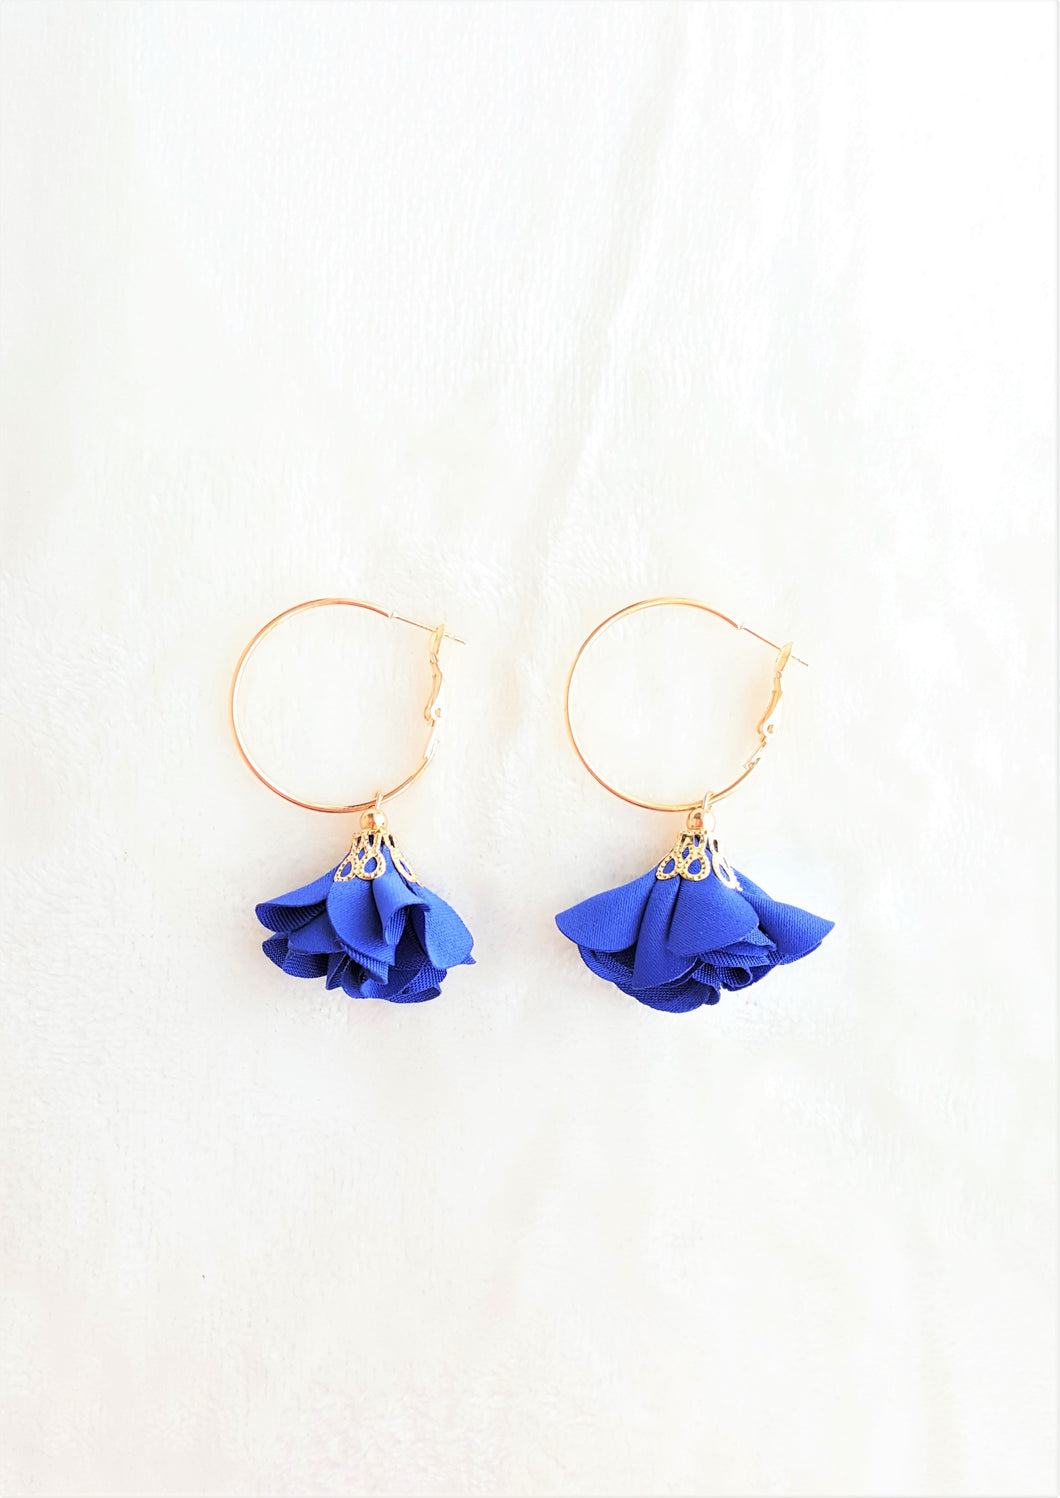 Fashion Earrings Floral Blue Flower Tassel Gold Hoop Earrings by UrbanFlair - Urban Flair USA